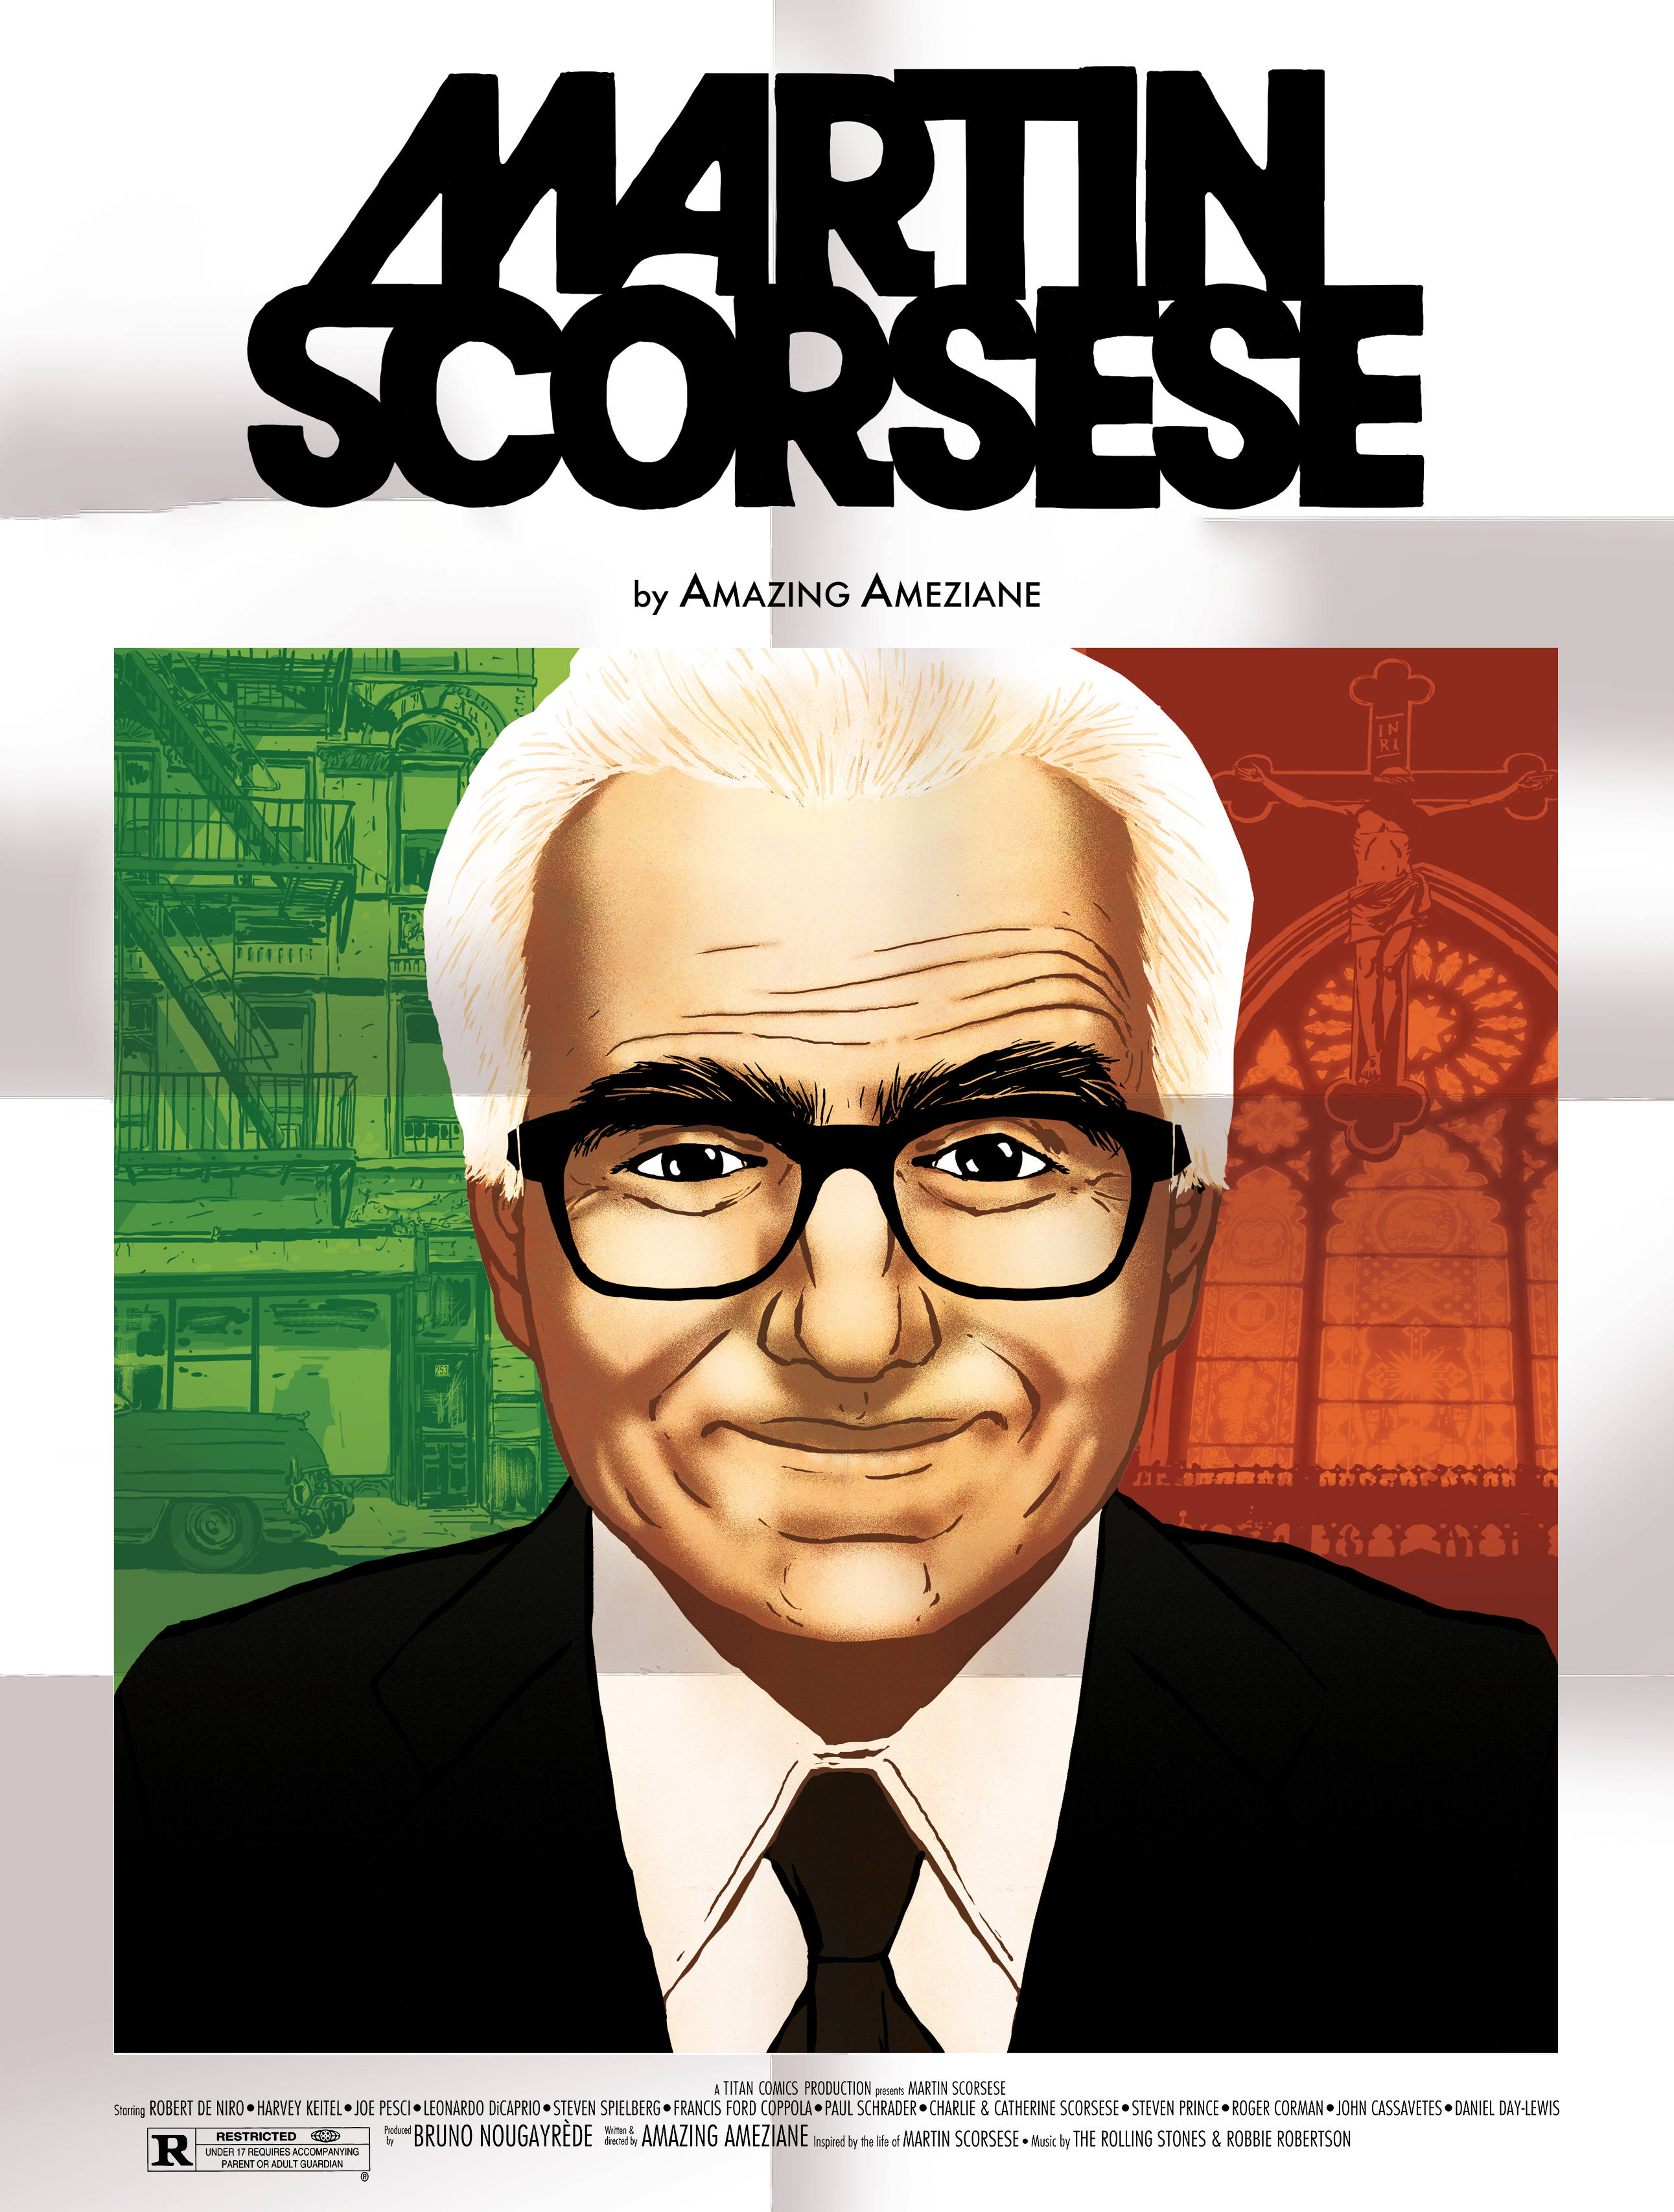 Art from Martin Scorsese